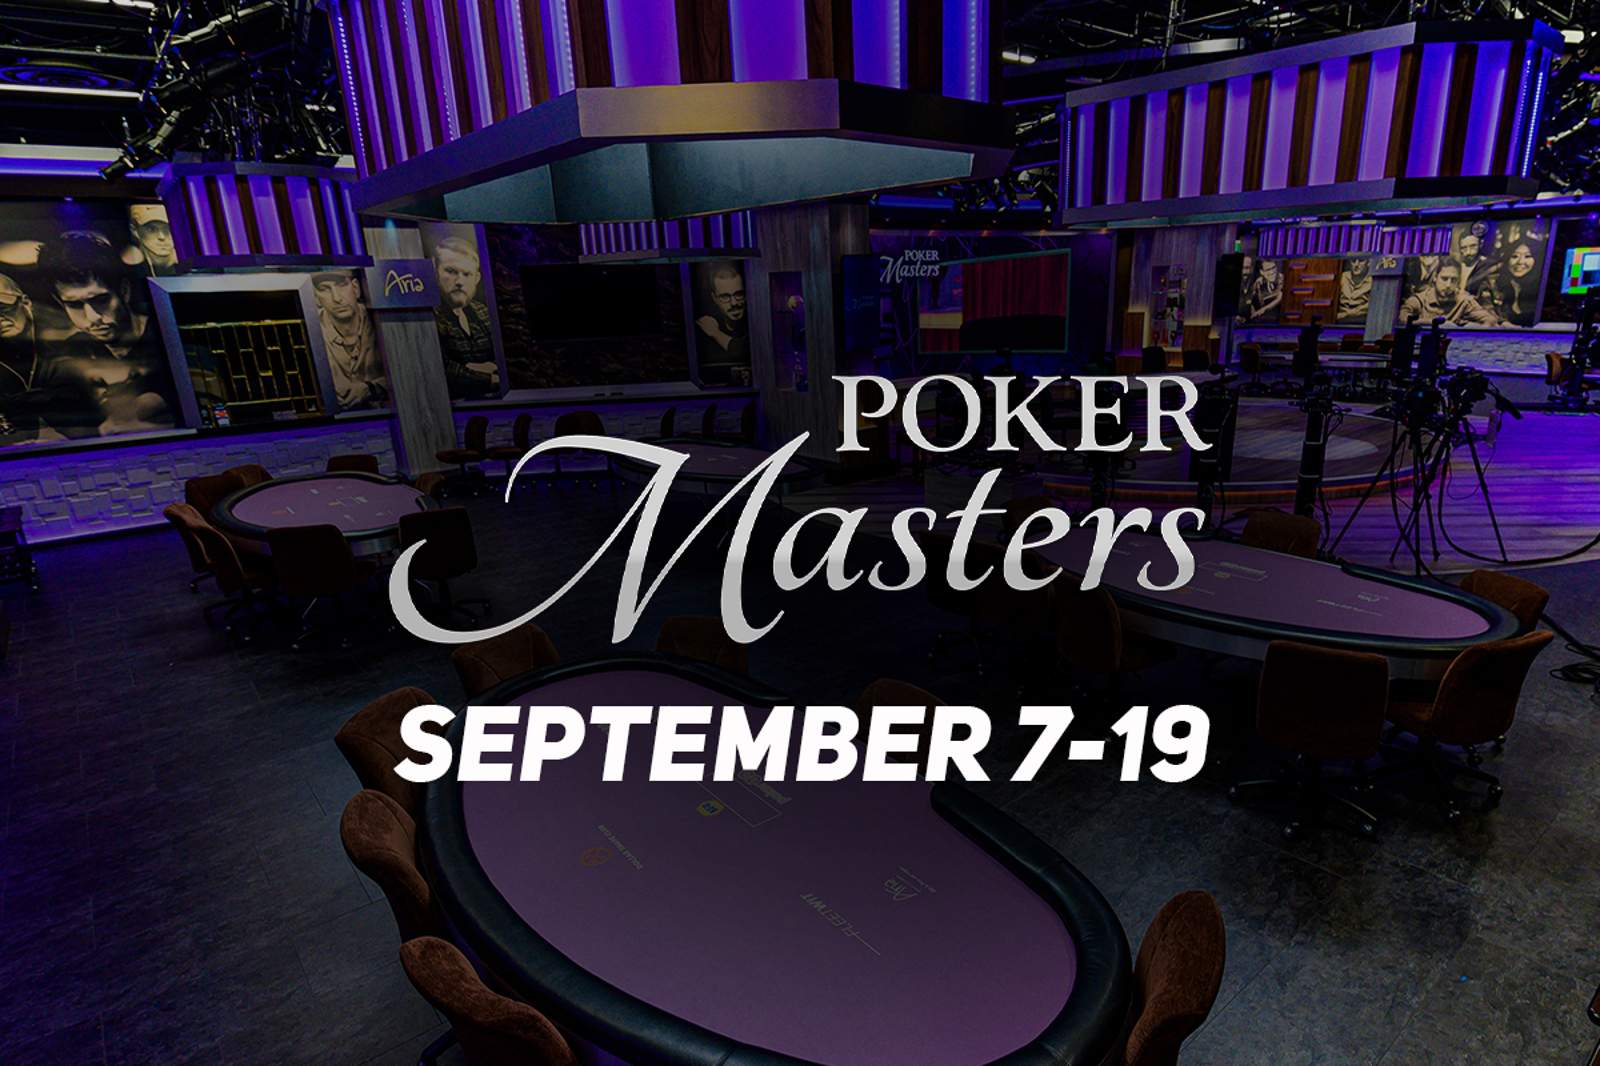 Poker Masters 2021 Schedule: September 7-19